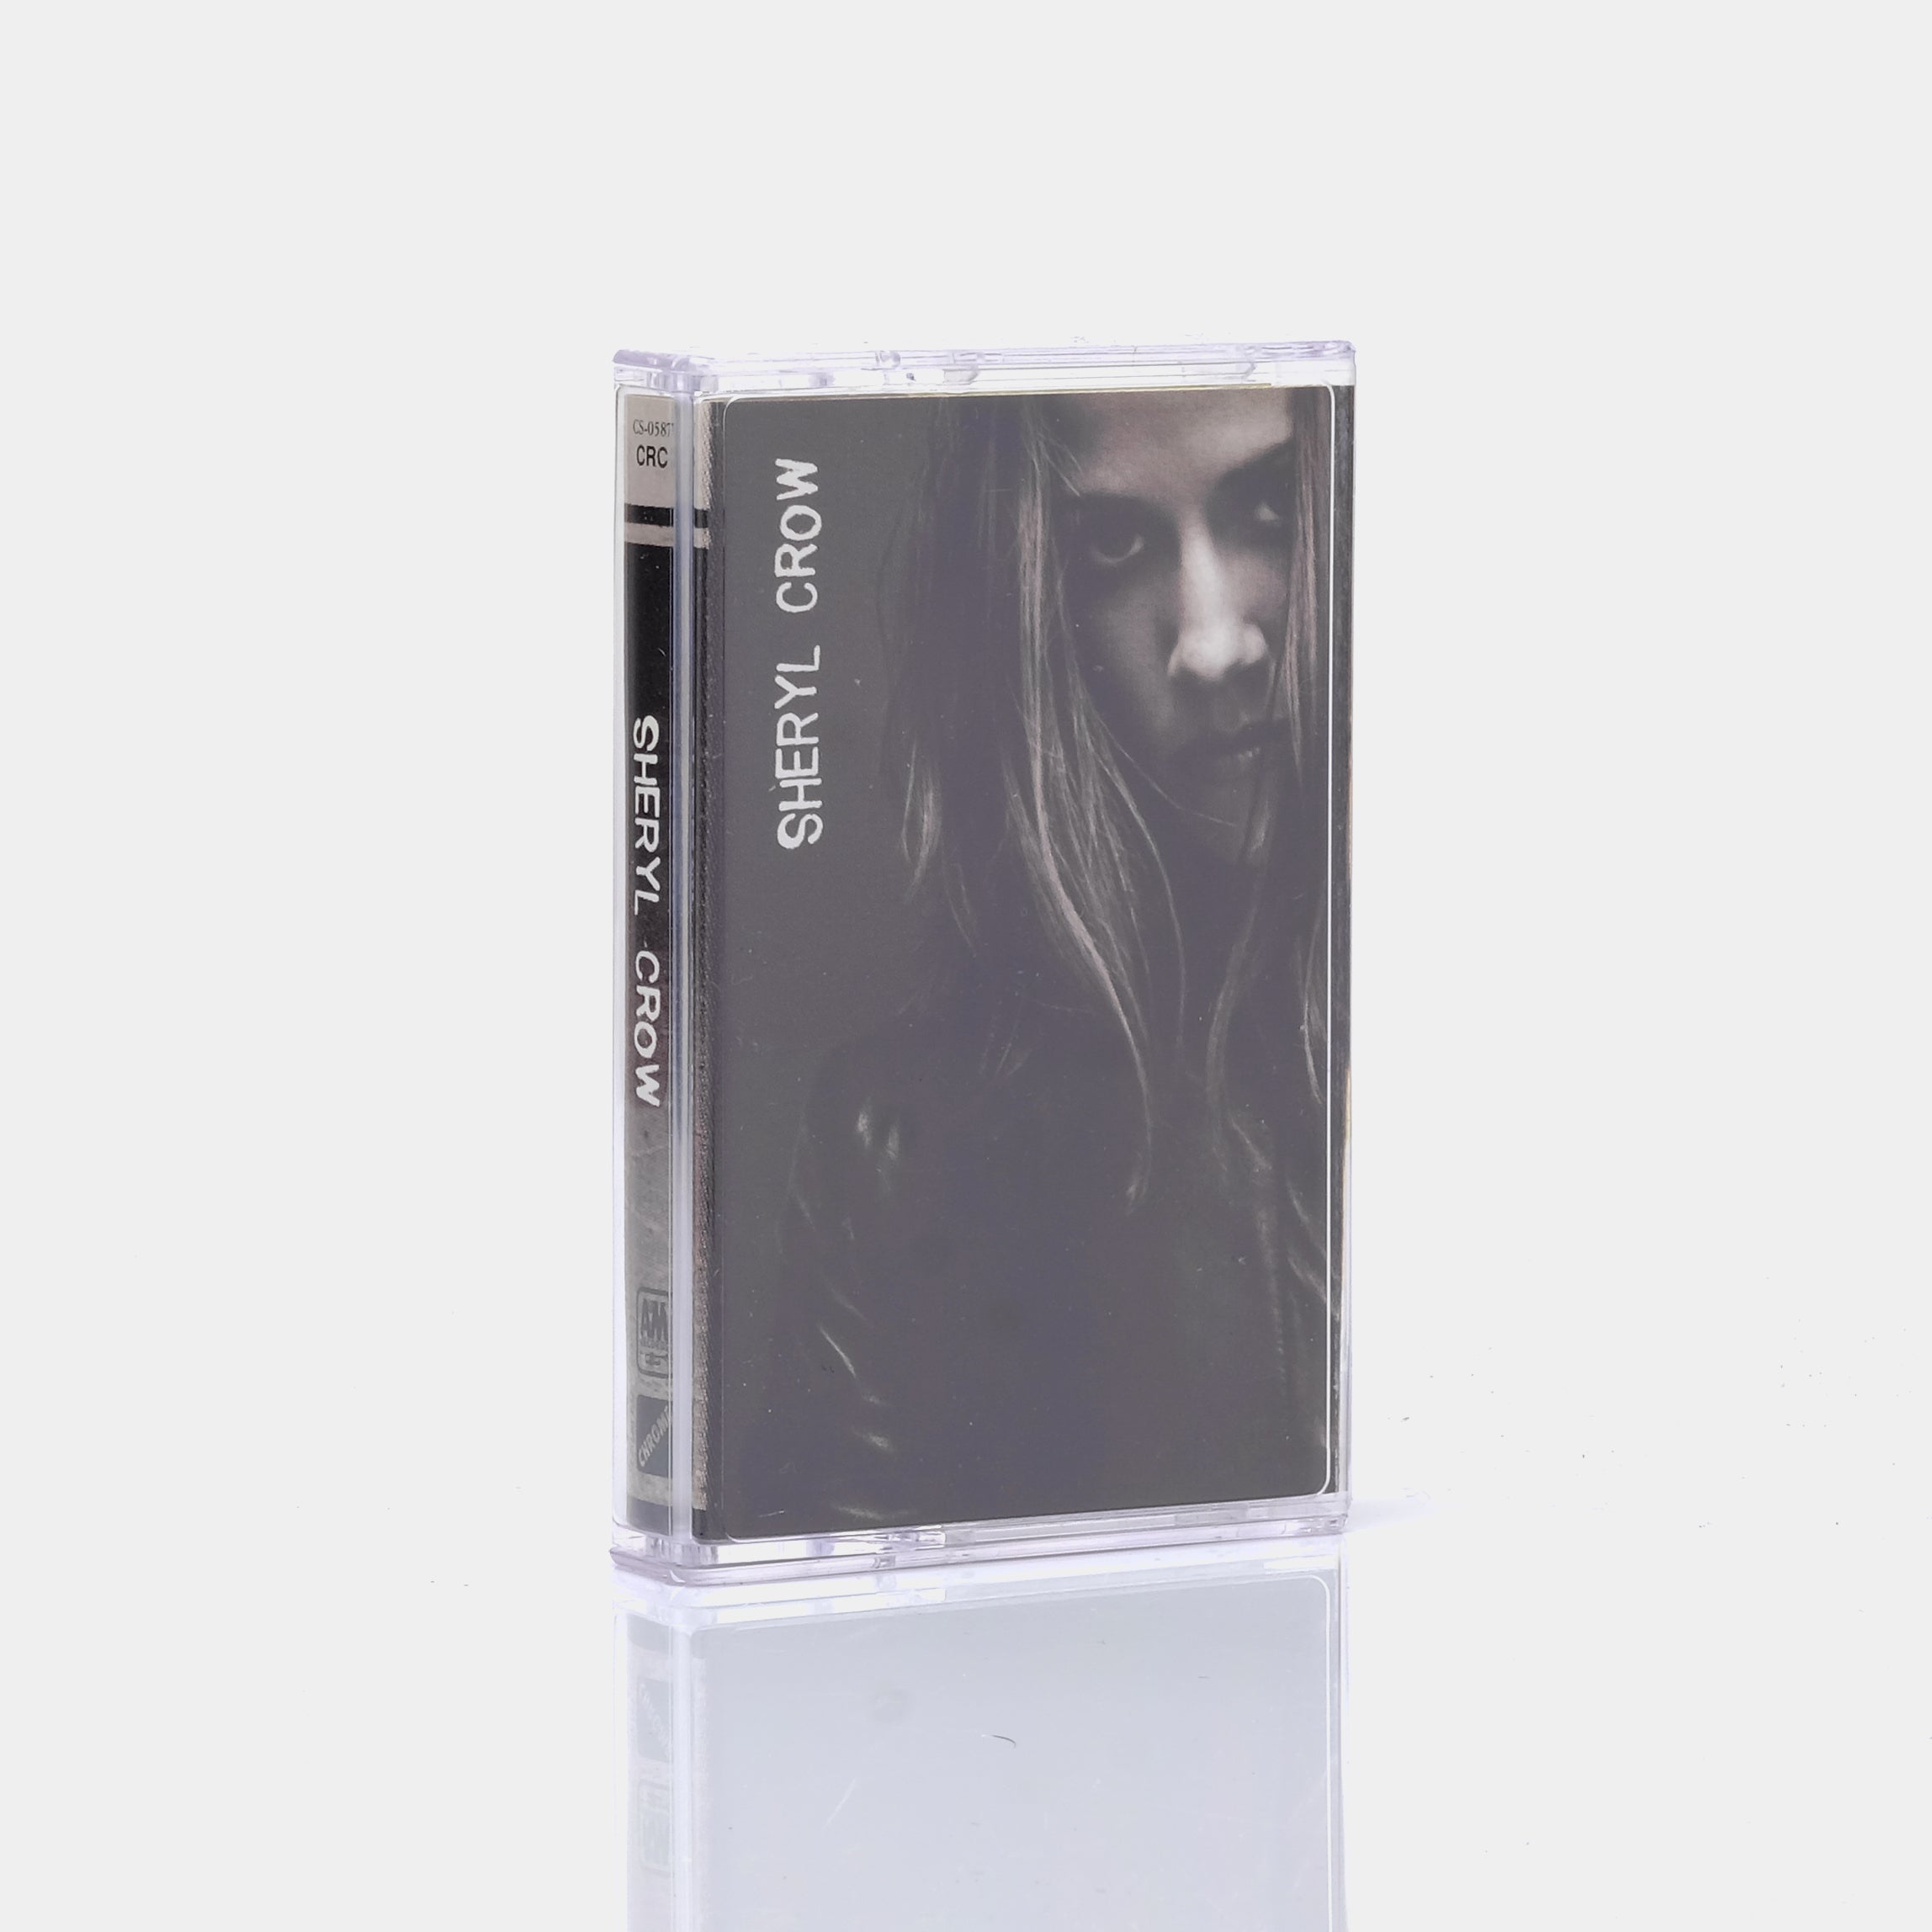 Sheryl Crow - Sheryl Crow Cassette Tape